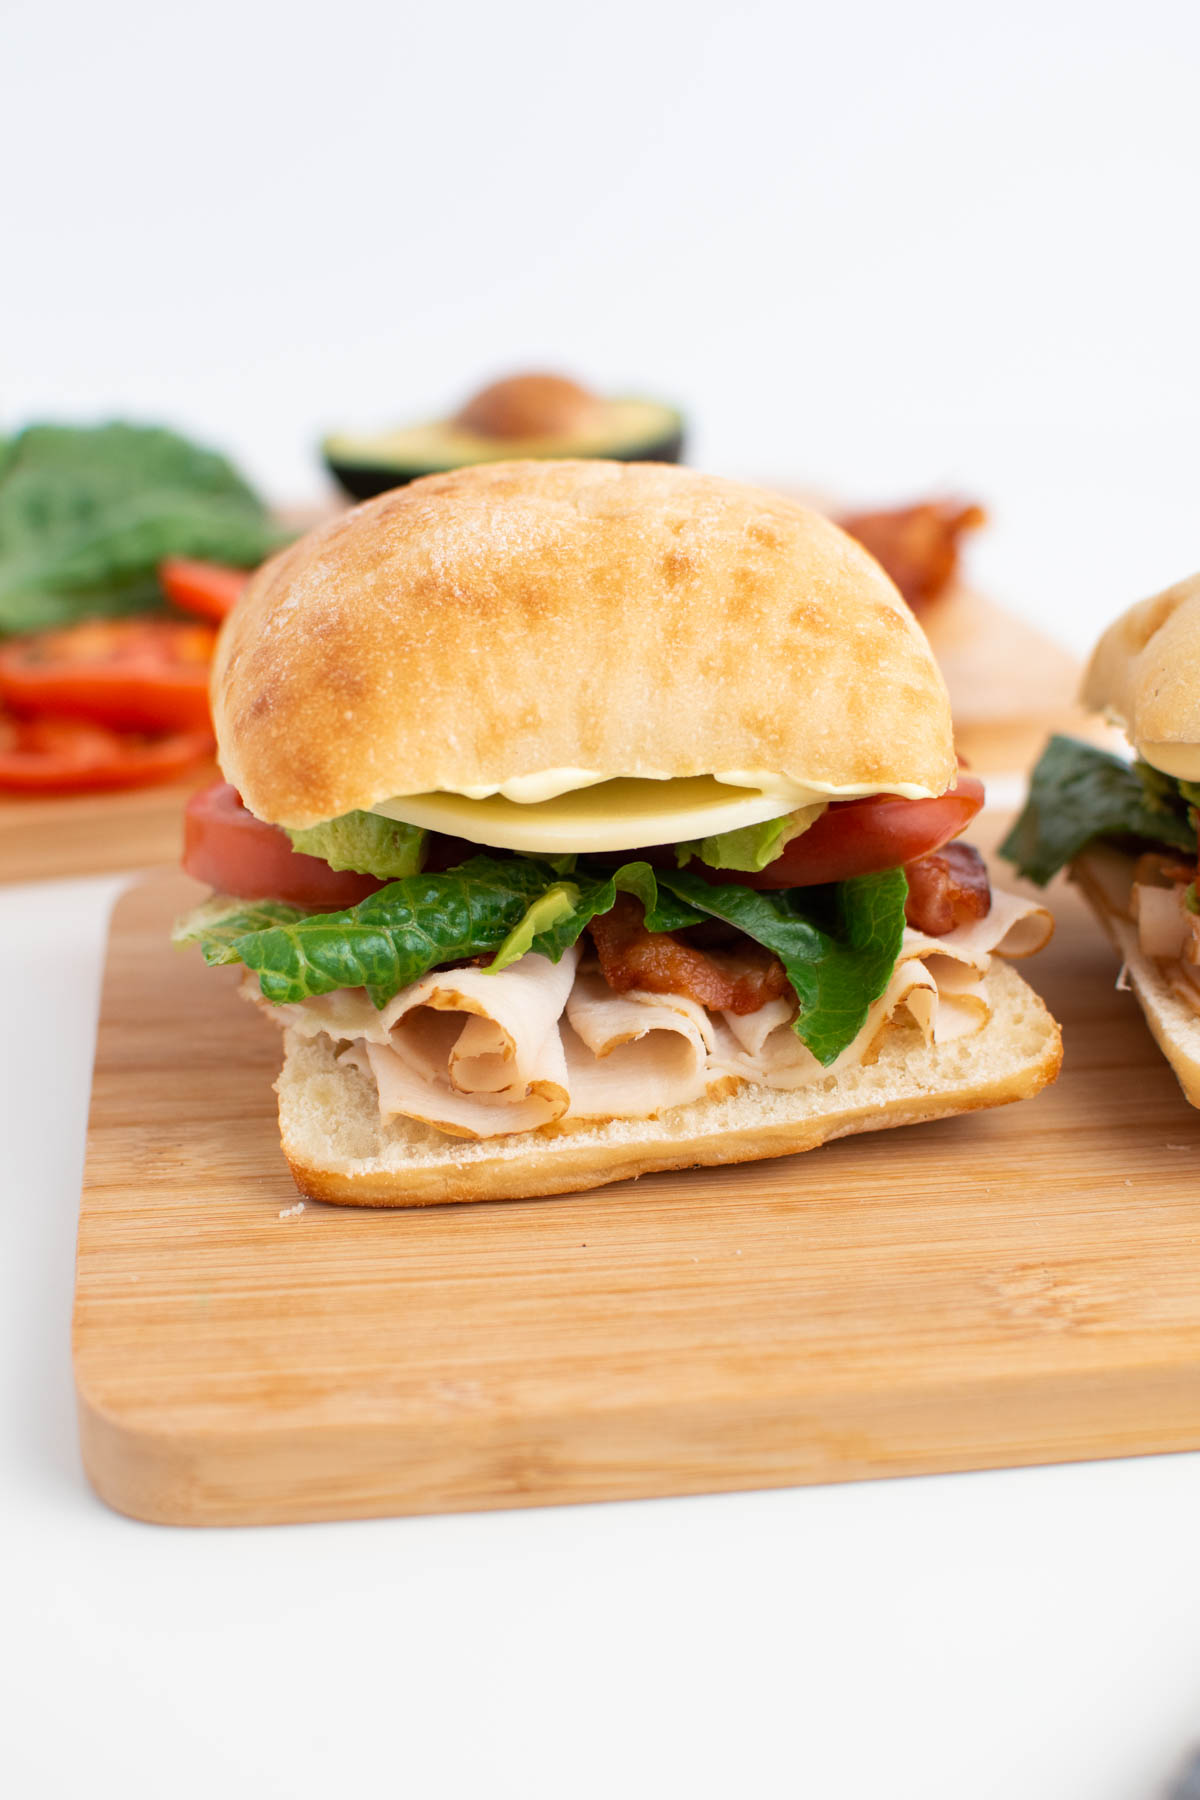 Avocado turkey sandwich on wood cutting board with sandwich ingredients in background.